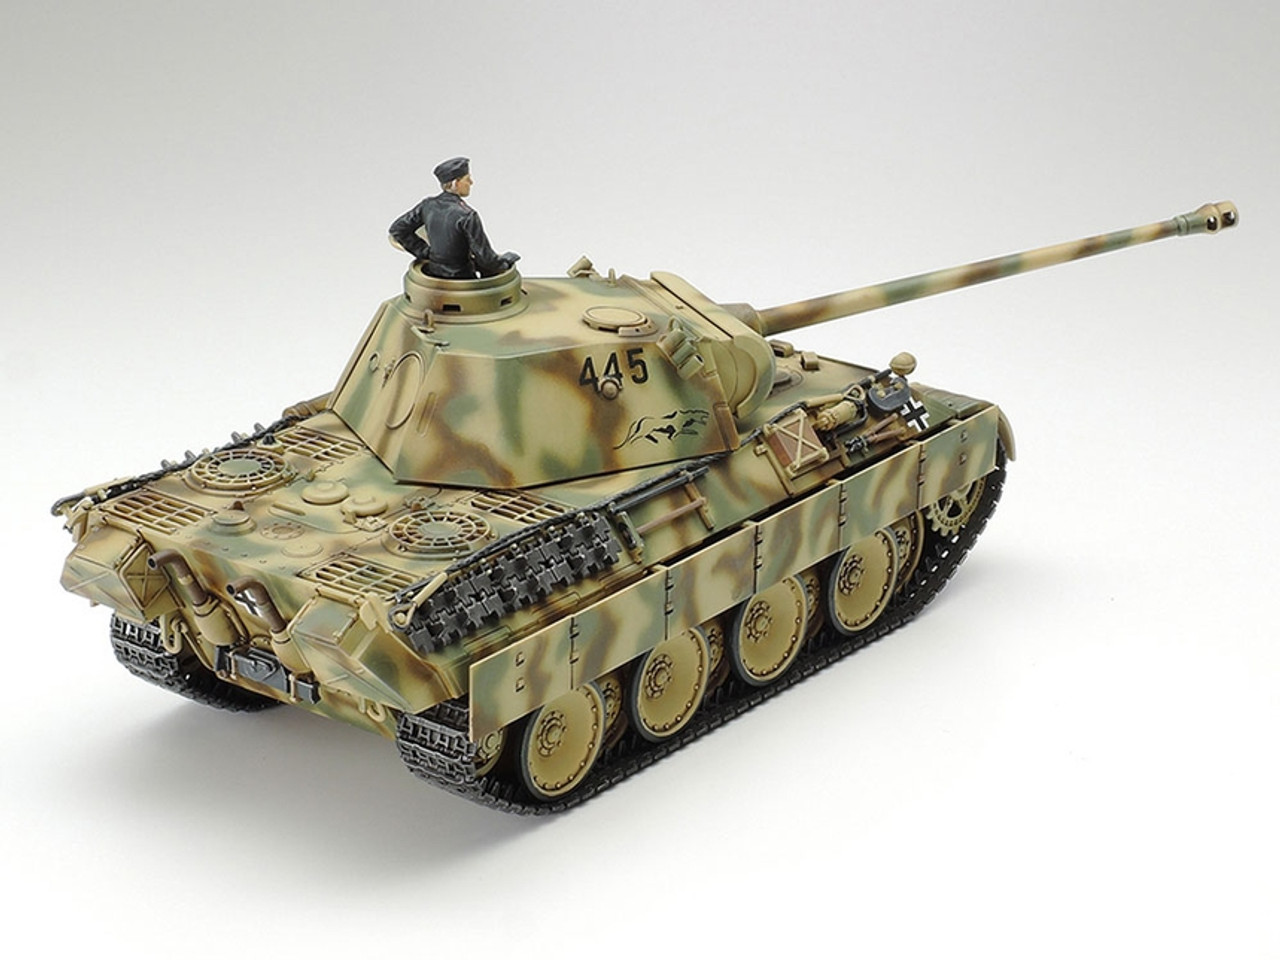 1/48 German Tank Panther Ausf D - 32597